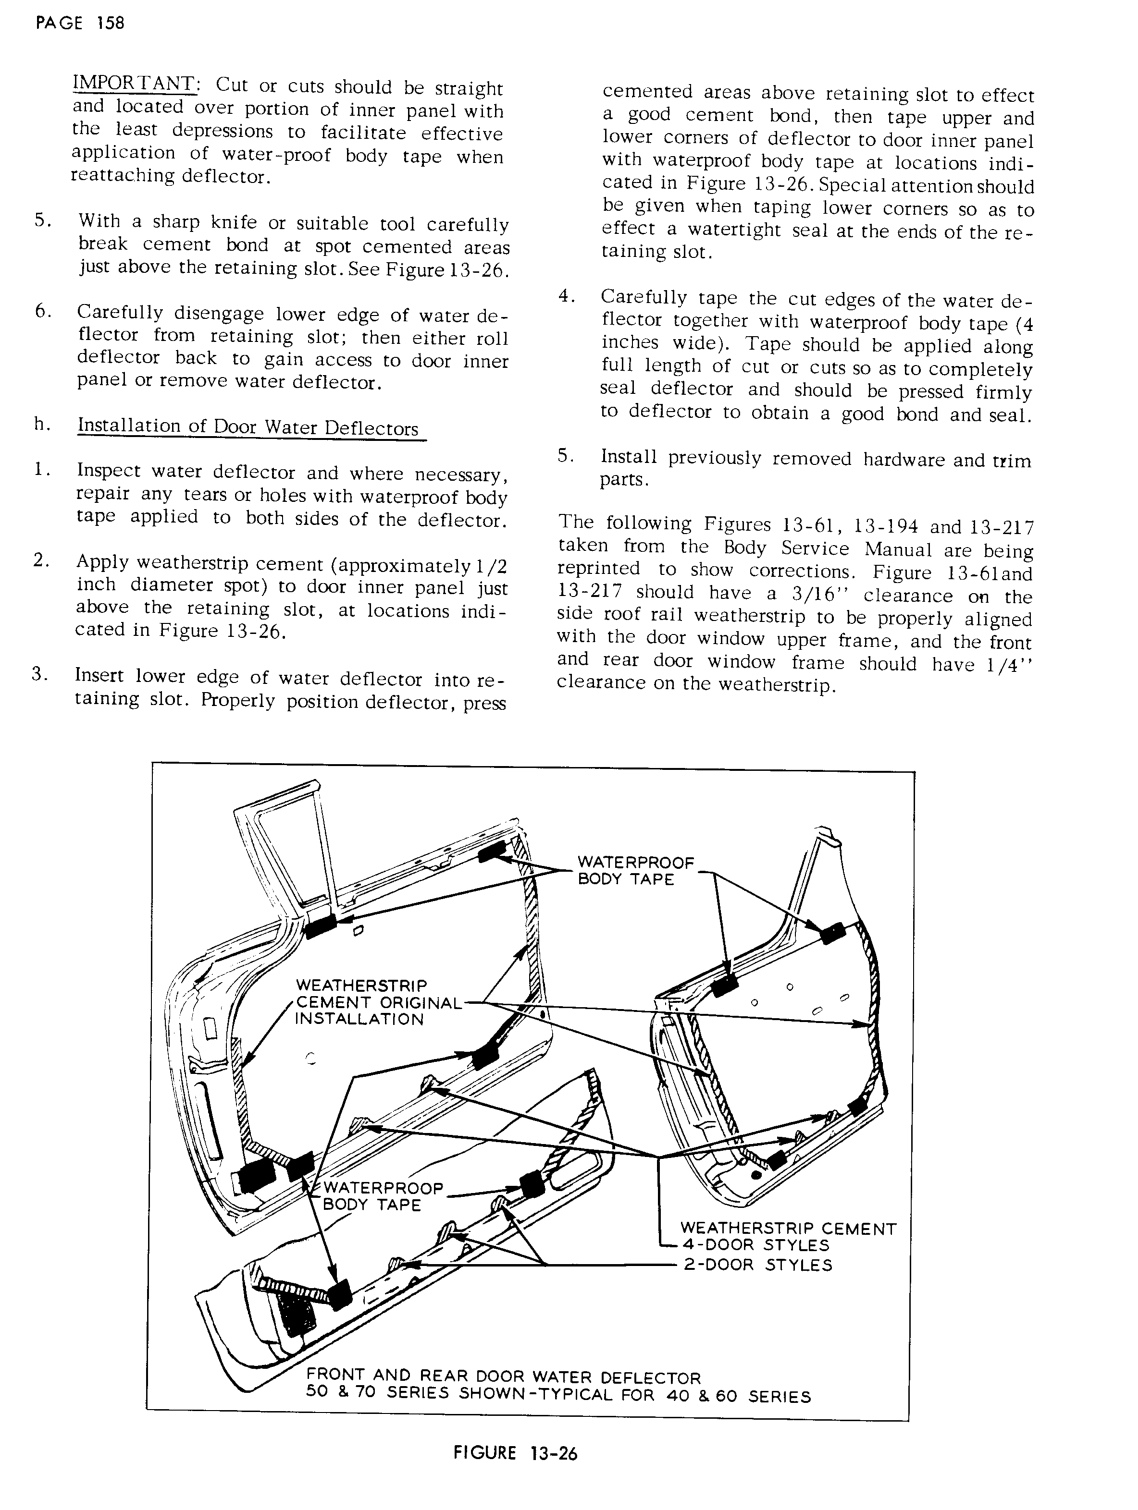 n_1957 Buick Product Service  Bulletins-159-159.jpg